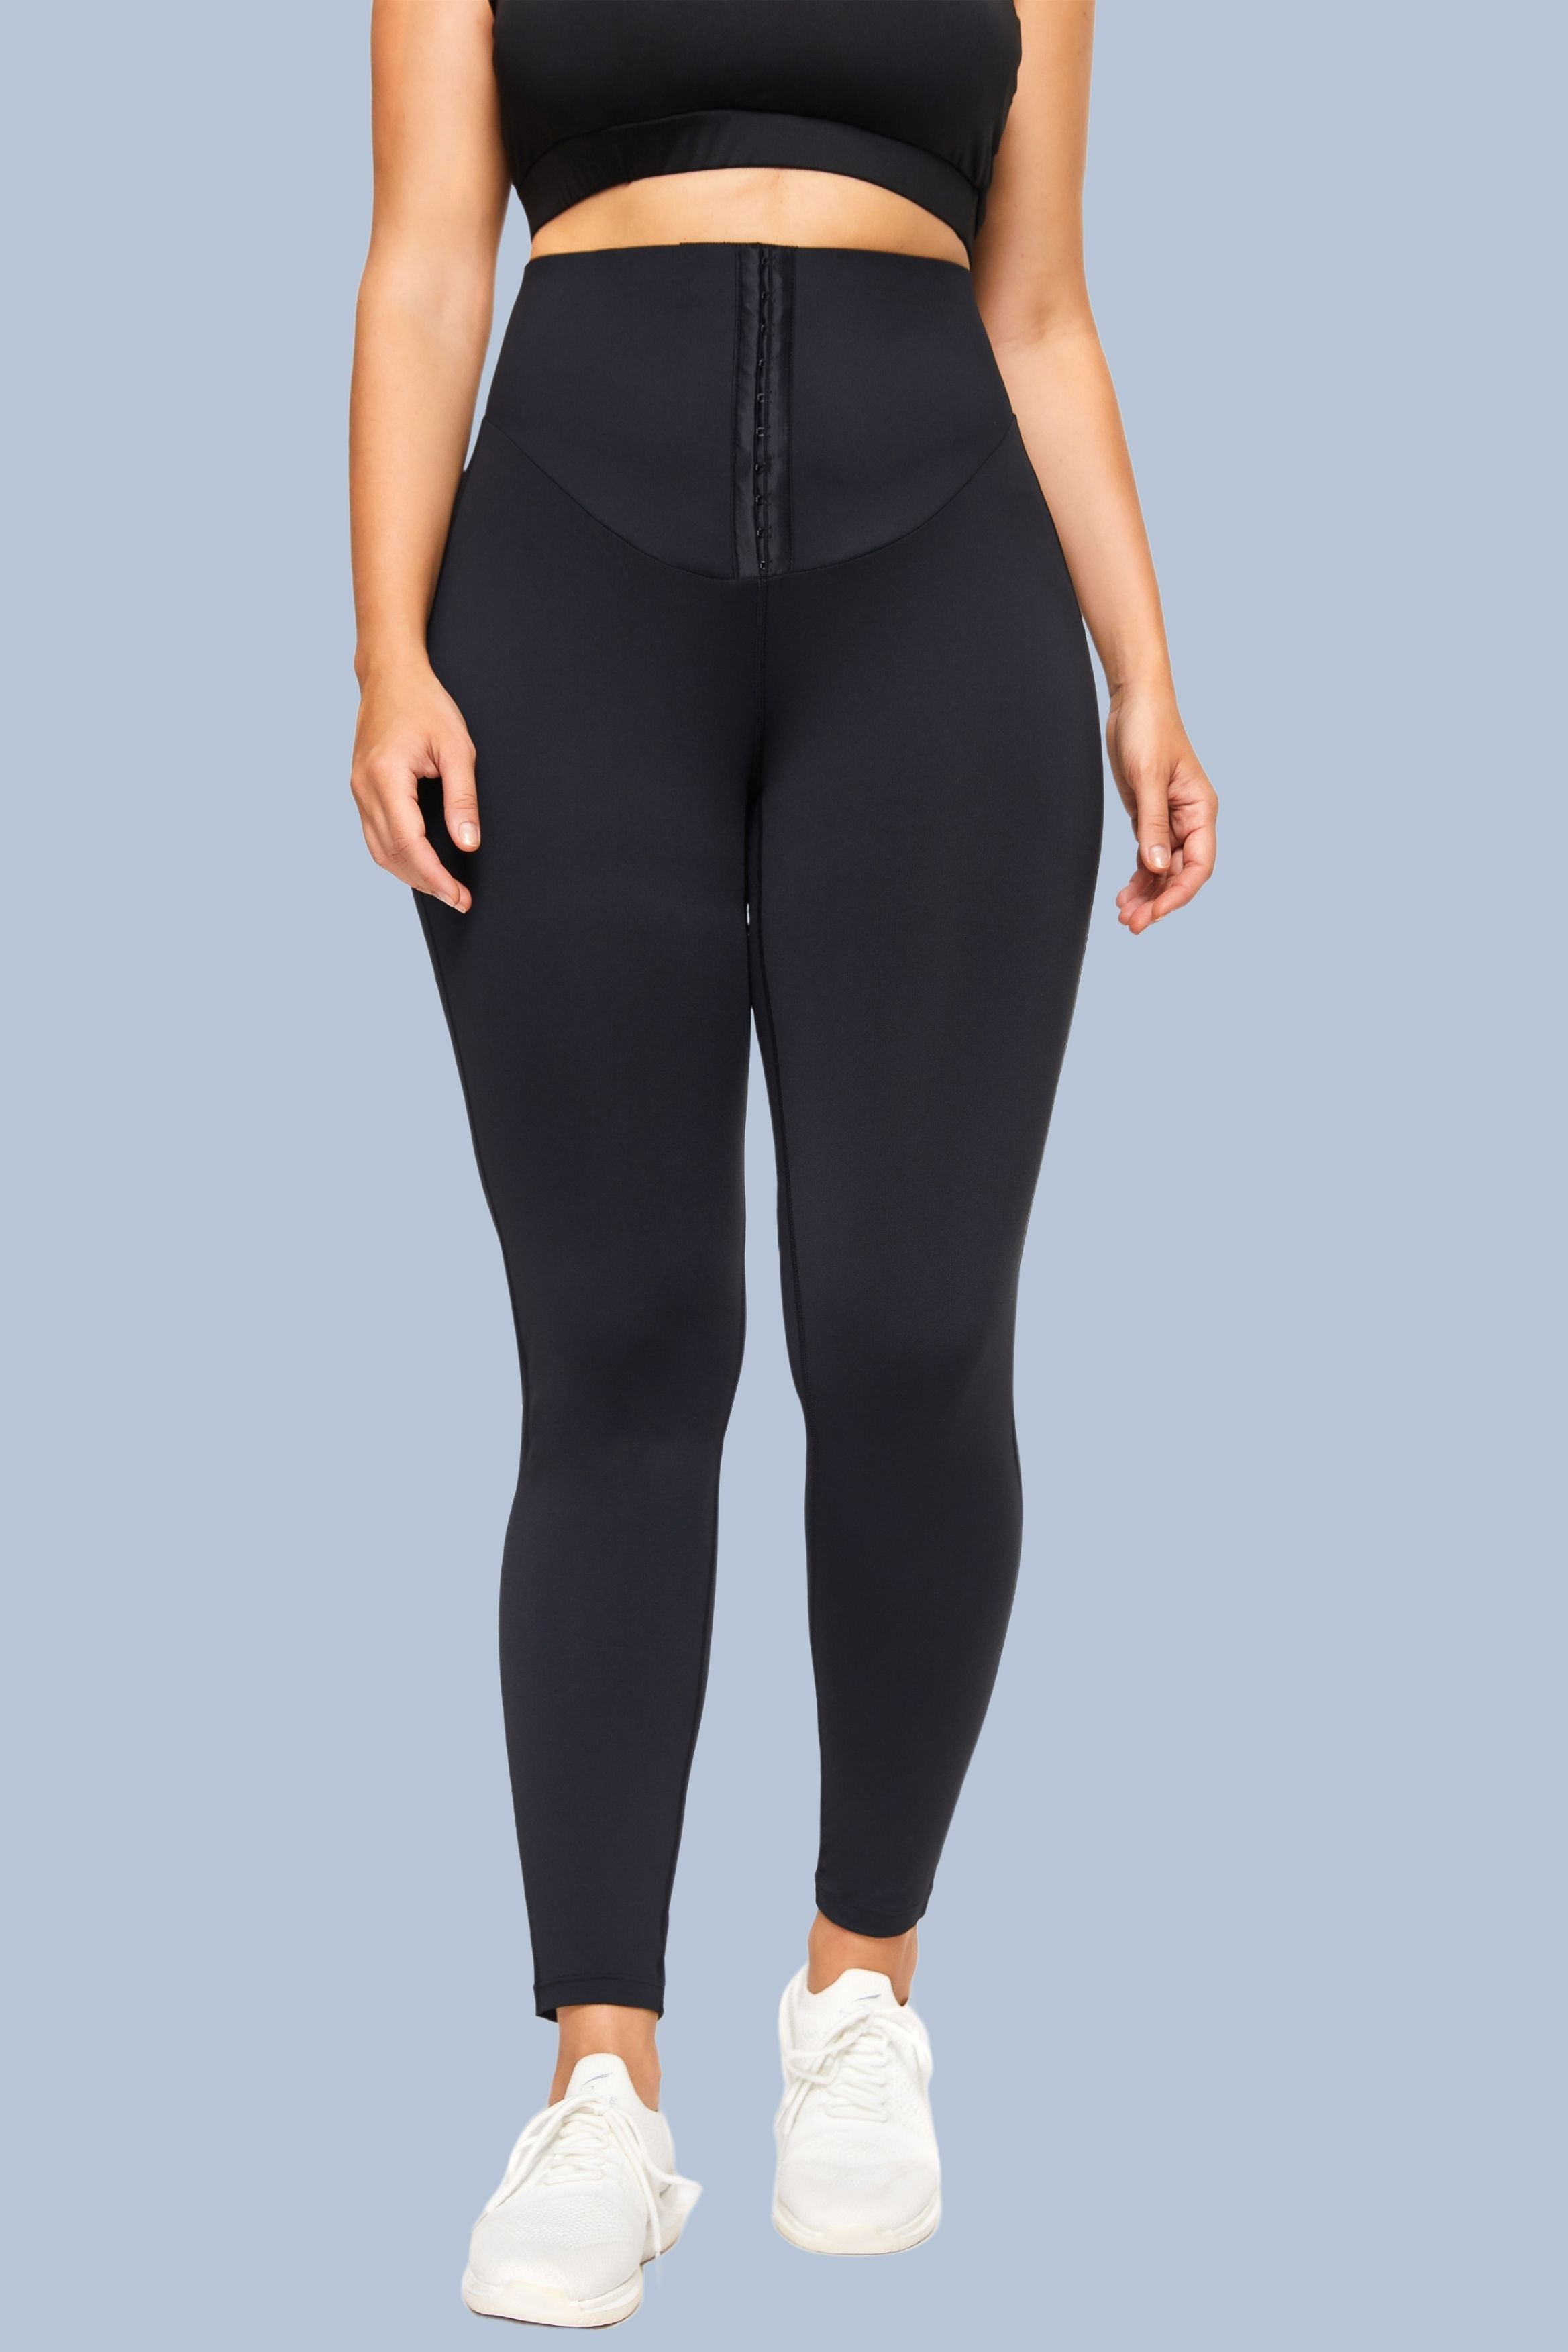 EHQJNJ Yoga Pants Plus Size for Women Xxxl Leggings for Women